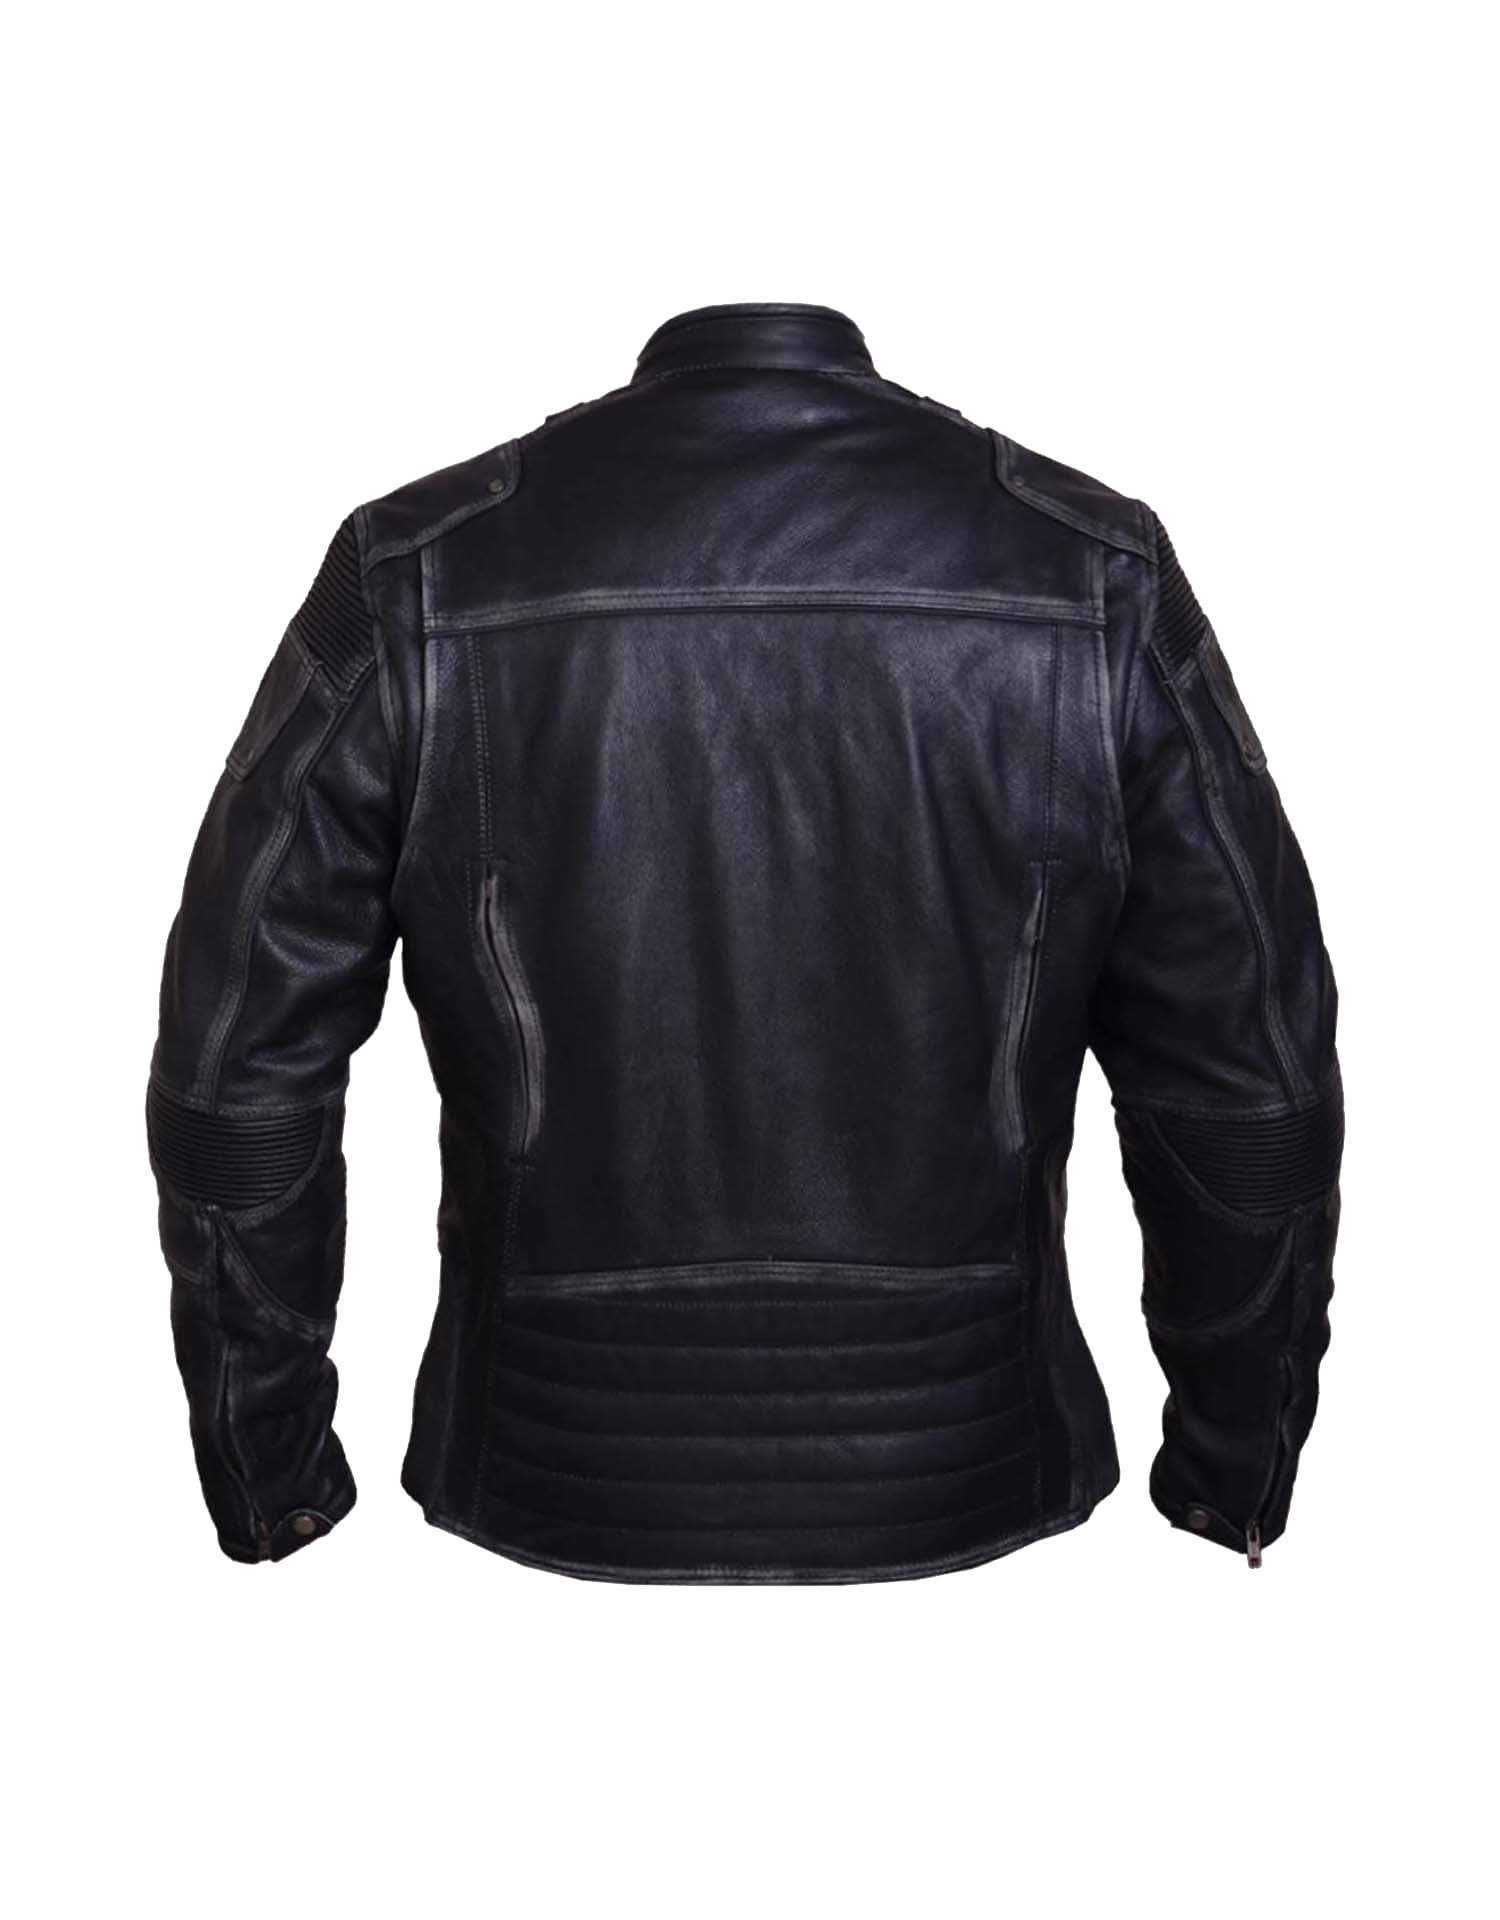 UNIK Ladies Ultra Leather Reflective Motorcycle Jacket - 6833-RF-UN